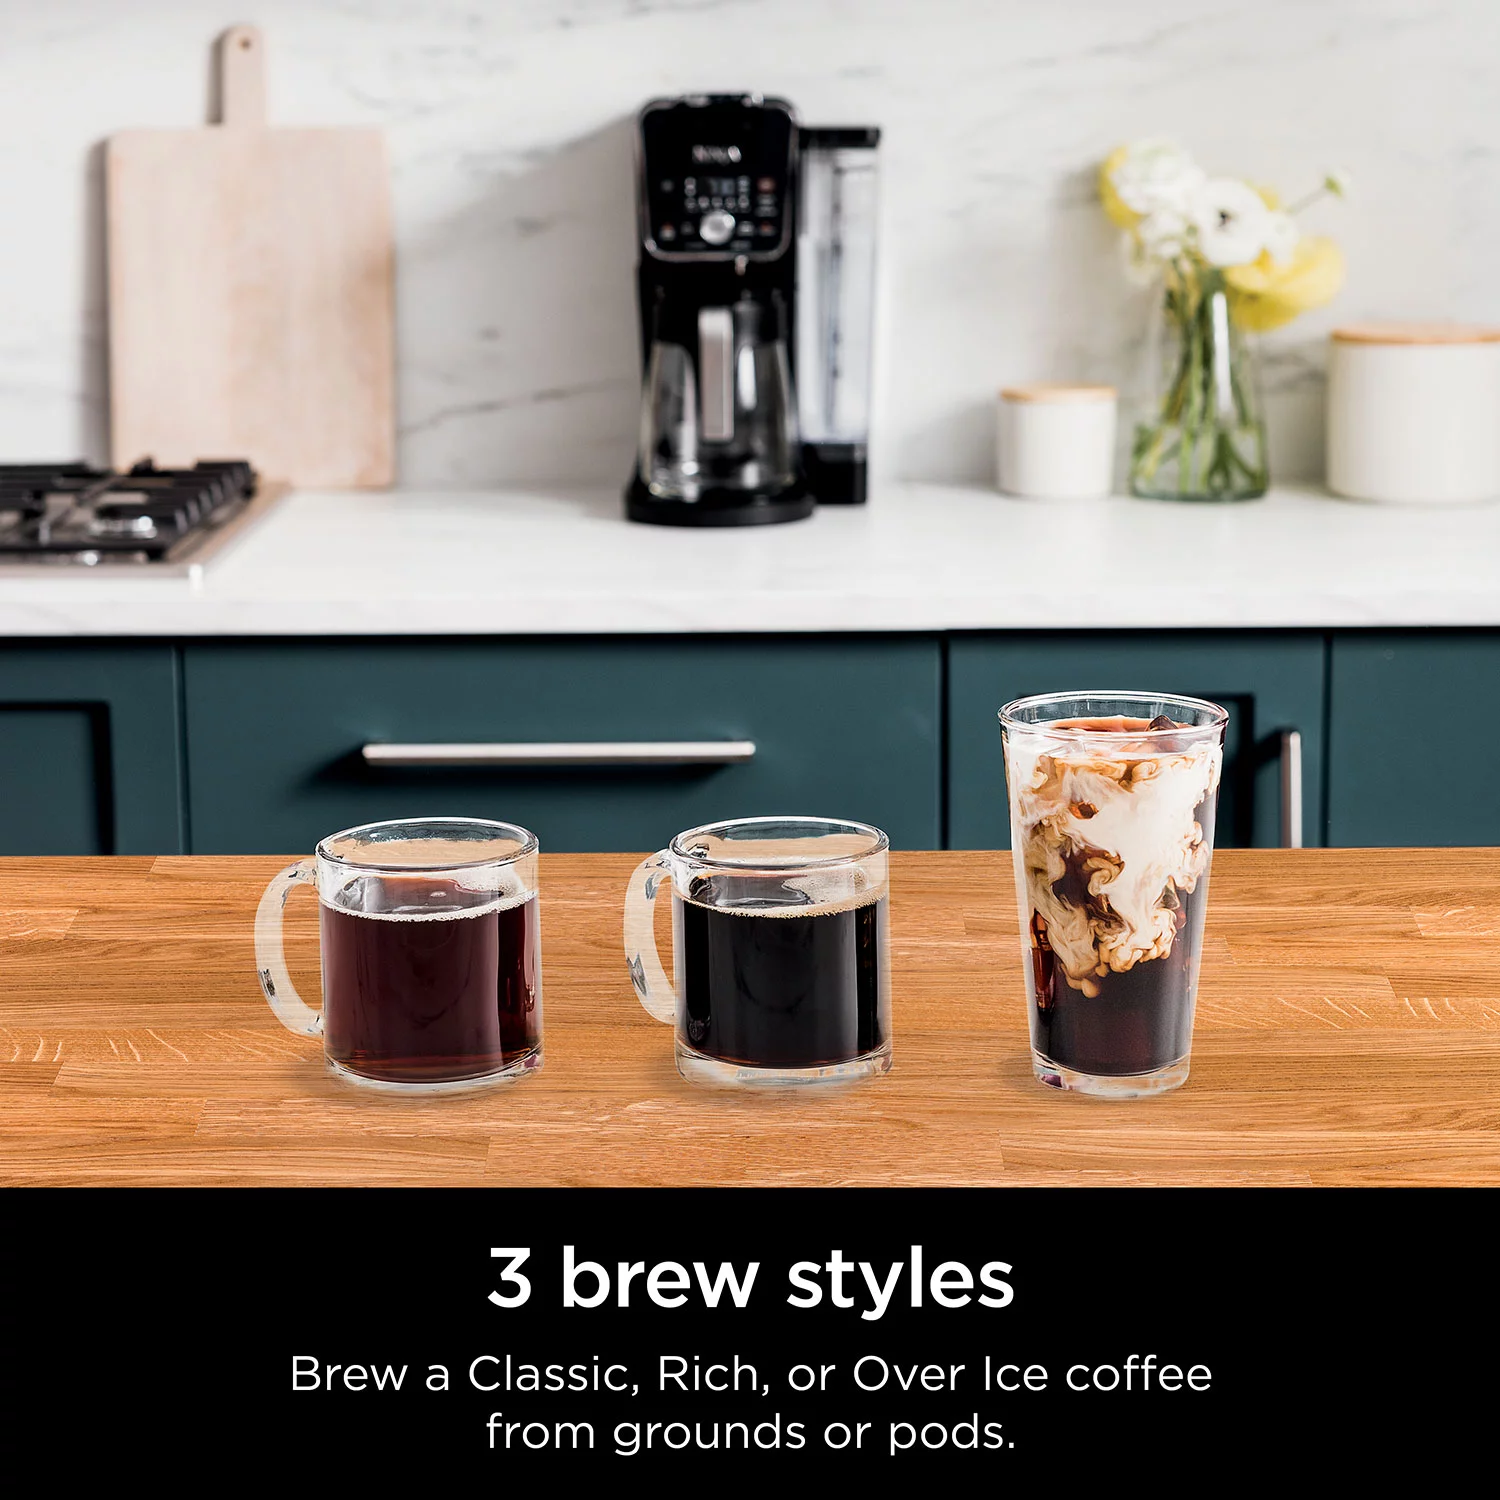 Ninja Dual Brew Coffee Maker CFP201 622356569712